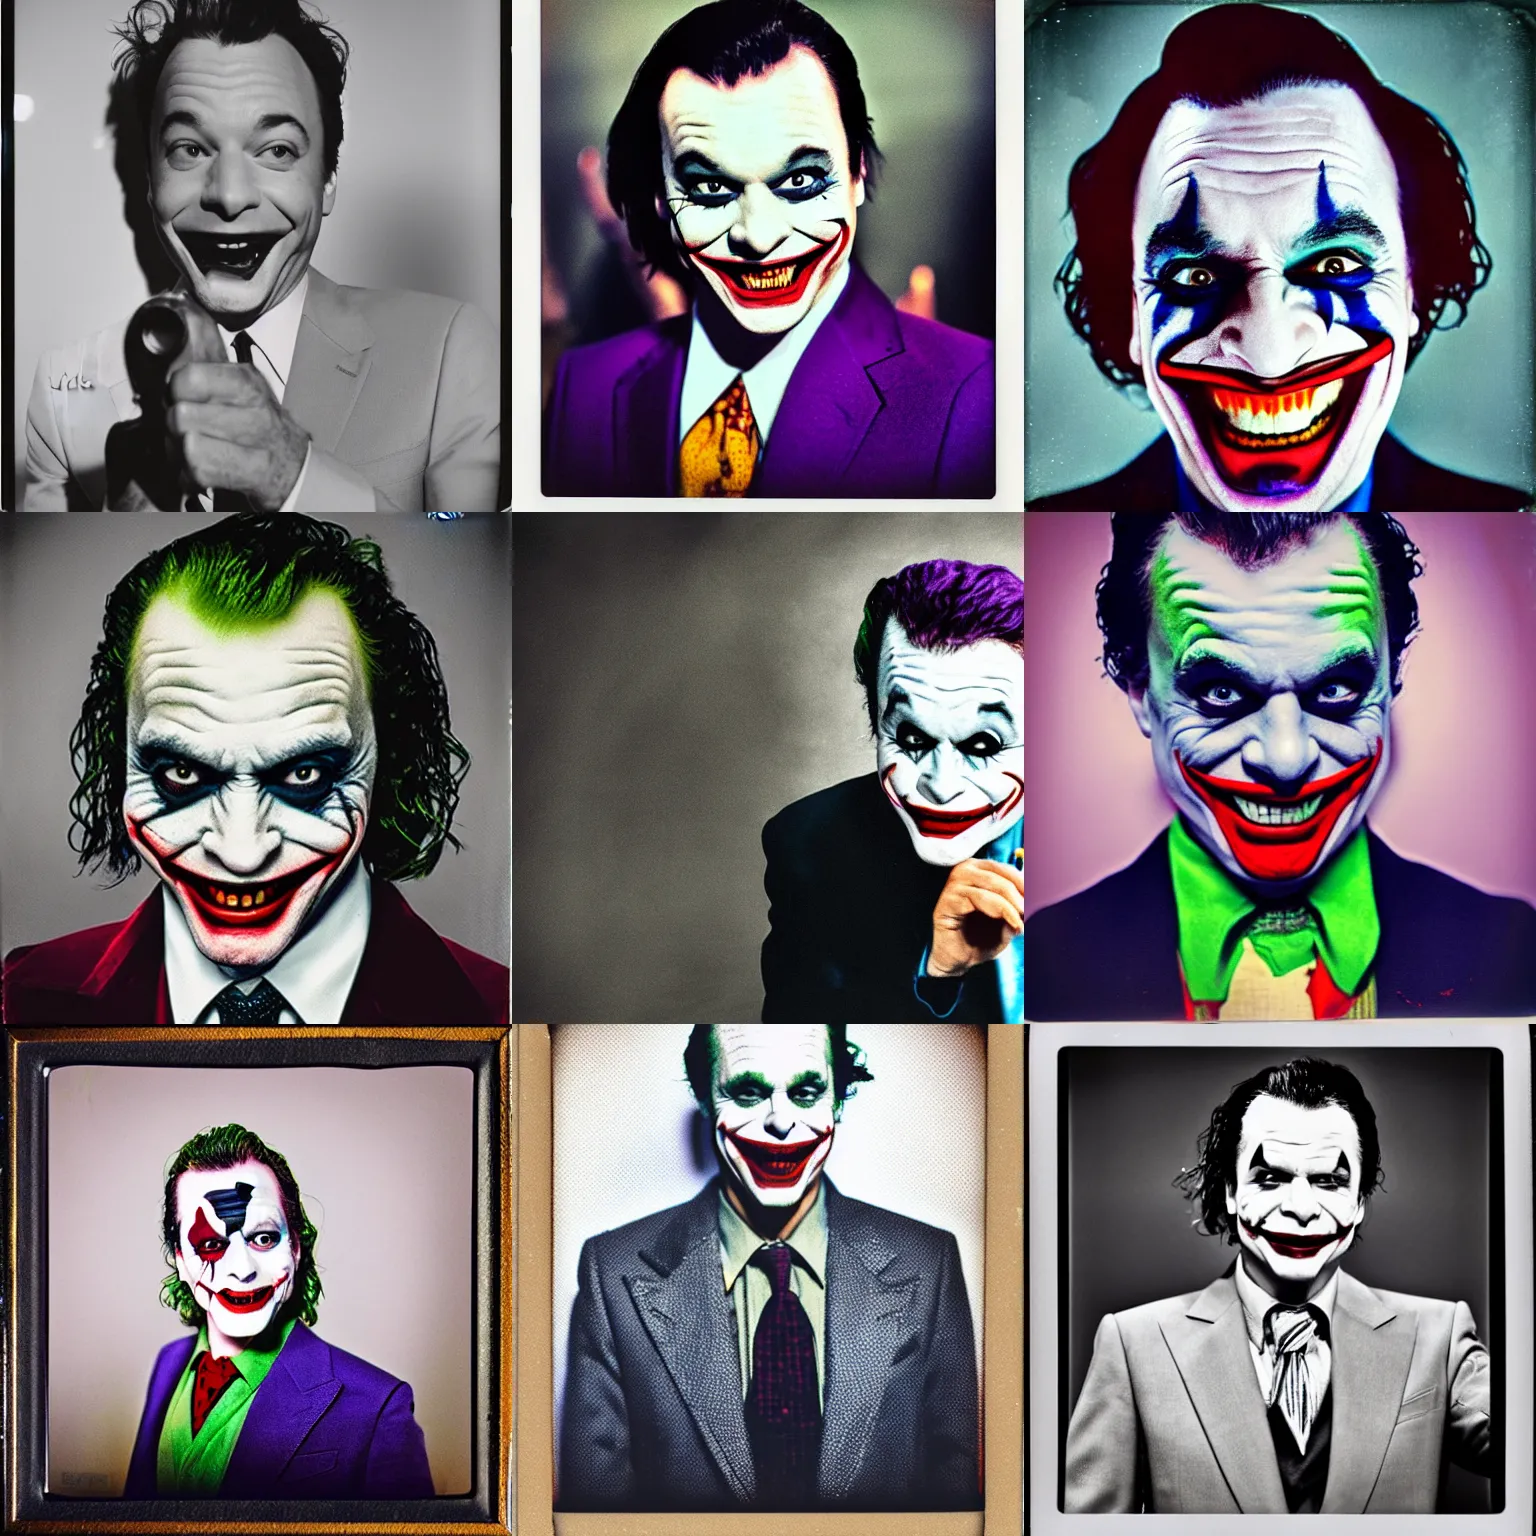 Prompt: Jimmy Fallon as the joker, polaroid photograph, 4k